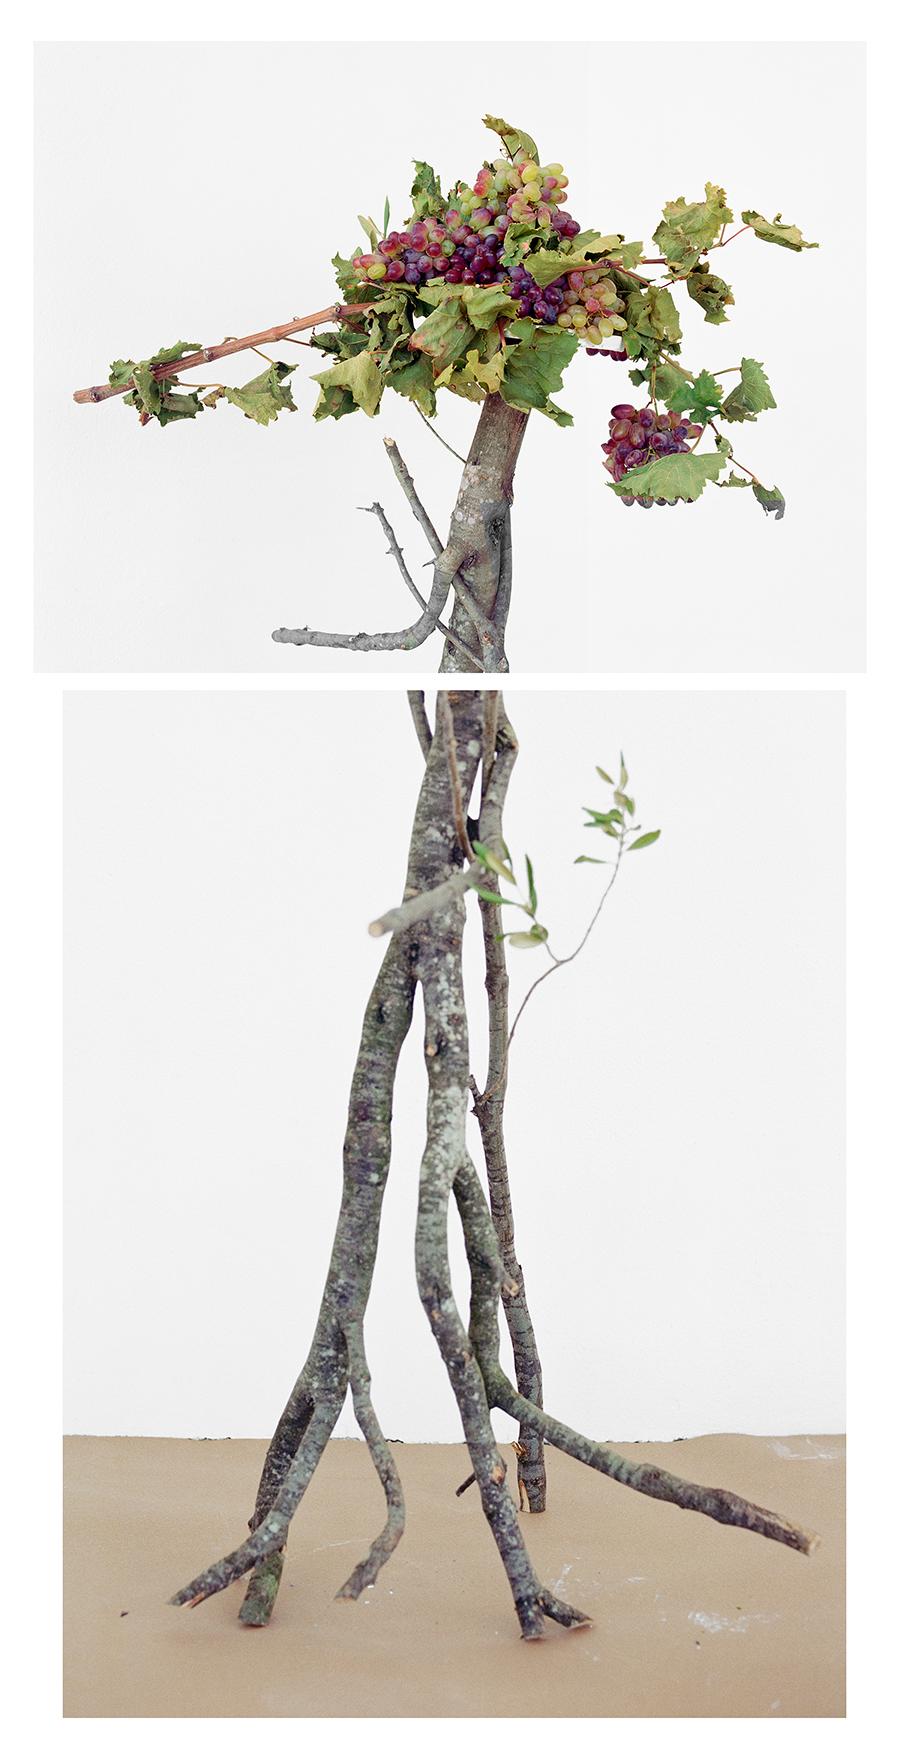 David Halliday Still-Life Photograph - Walking Grapes: Figurative Still Life Photograph of Grapes & Branches